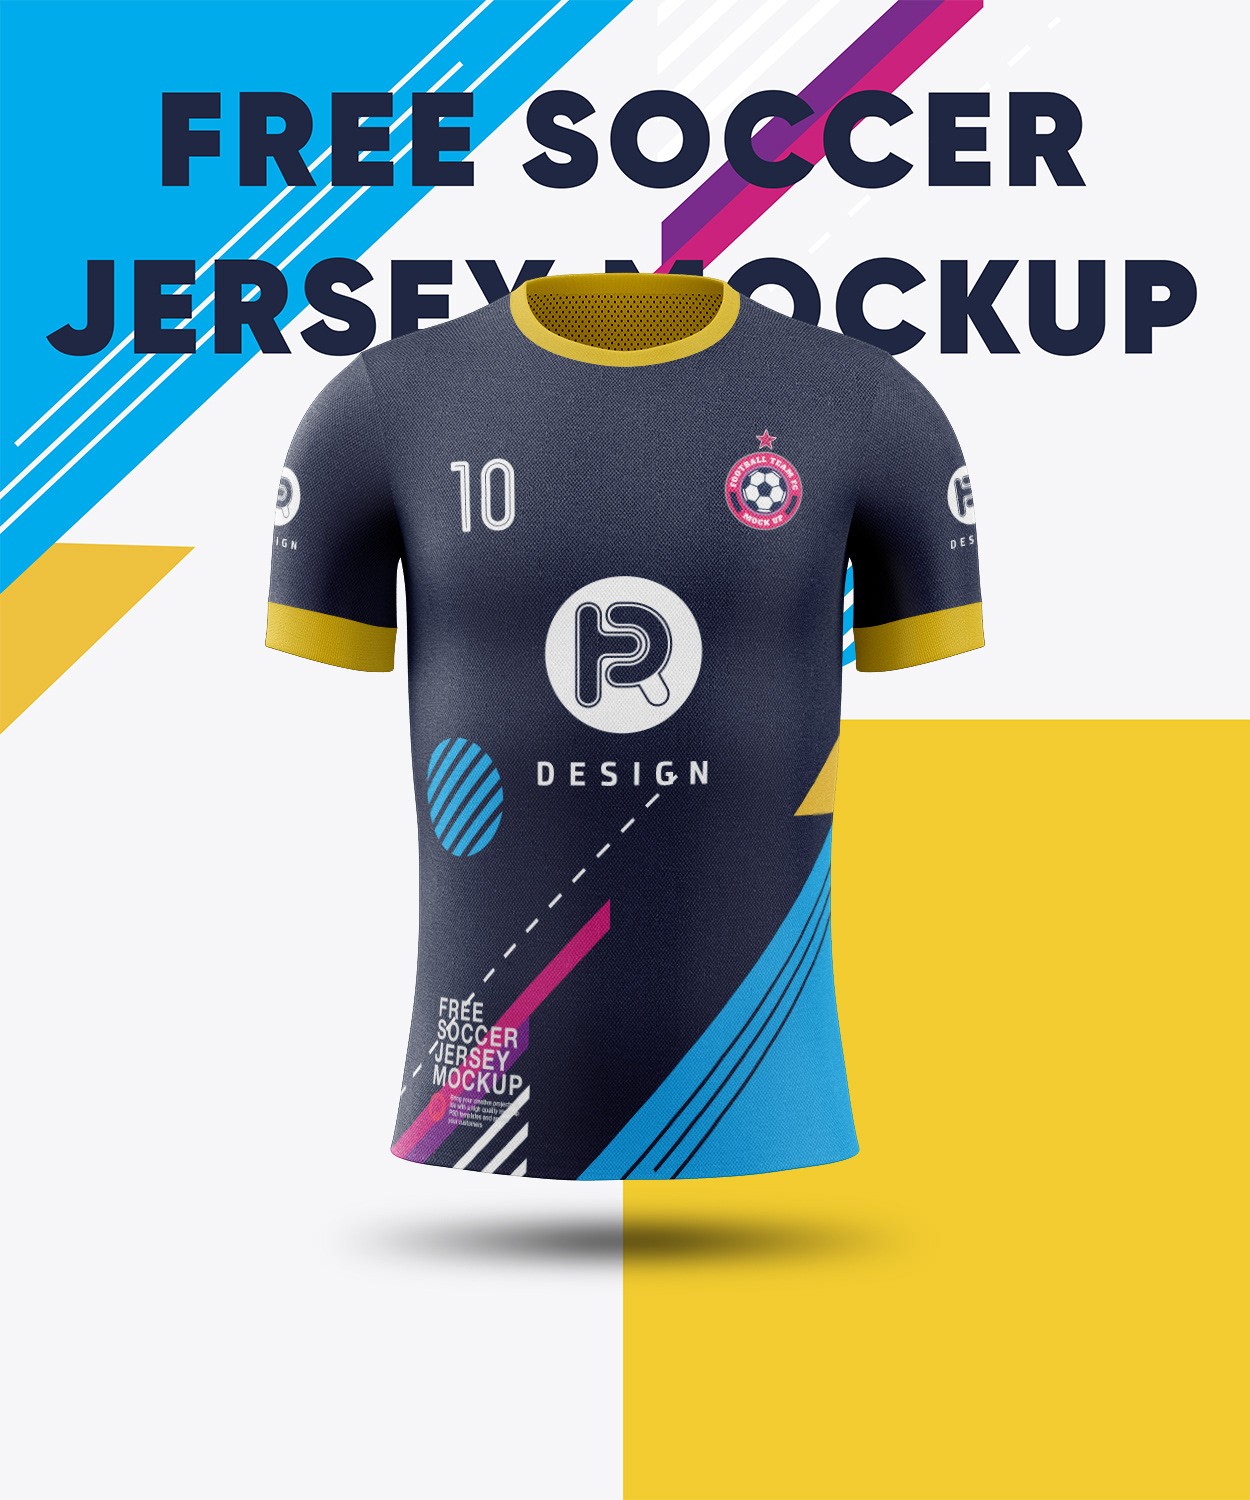 Uniform Footeball Mockup Download Free / Football / Soccer Kit Mockup Free Download | Soccer ...